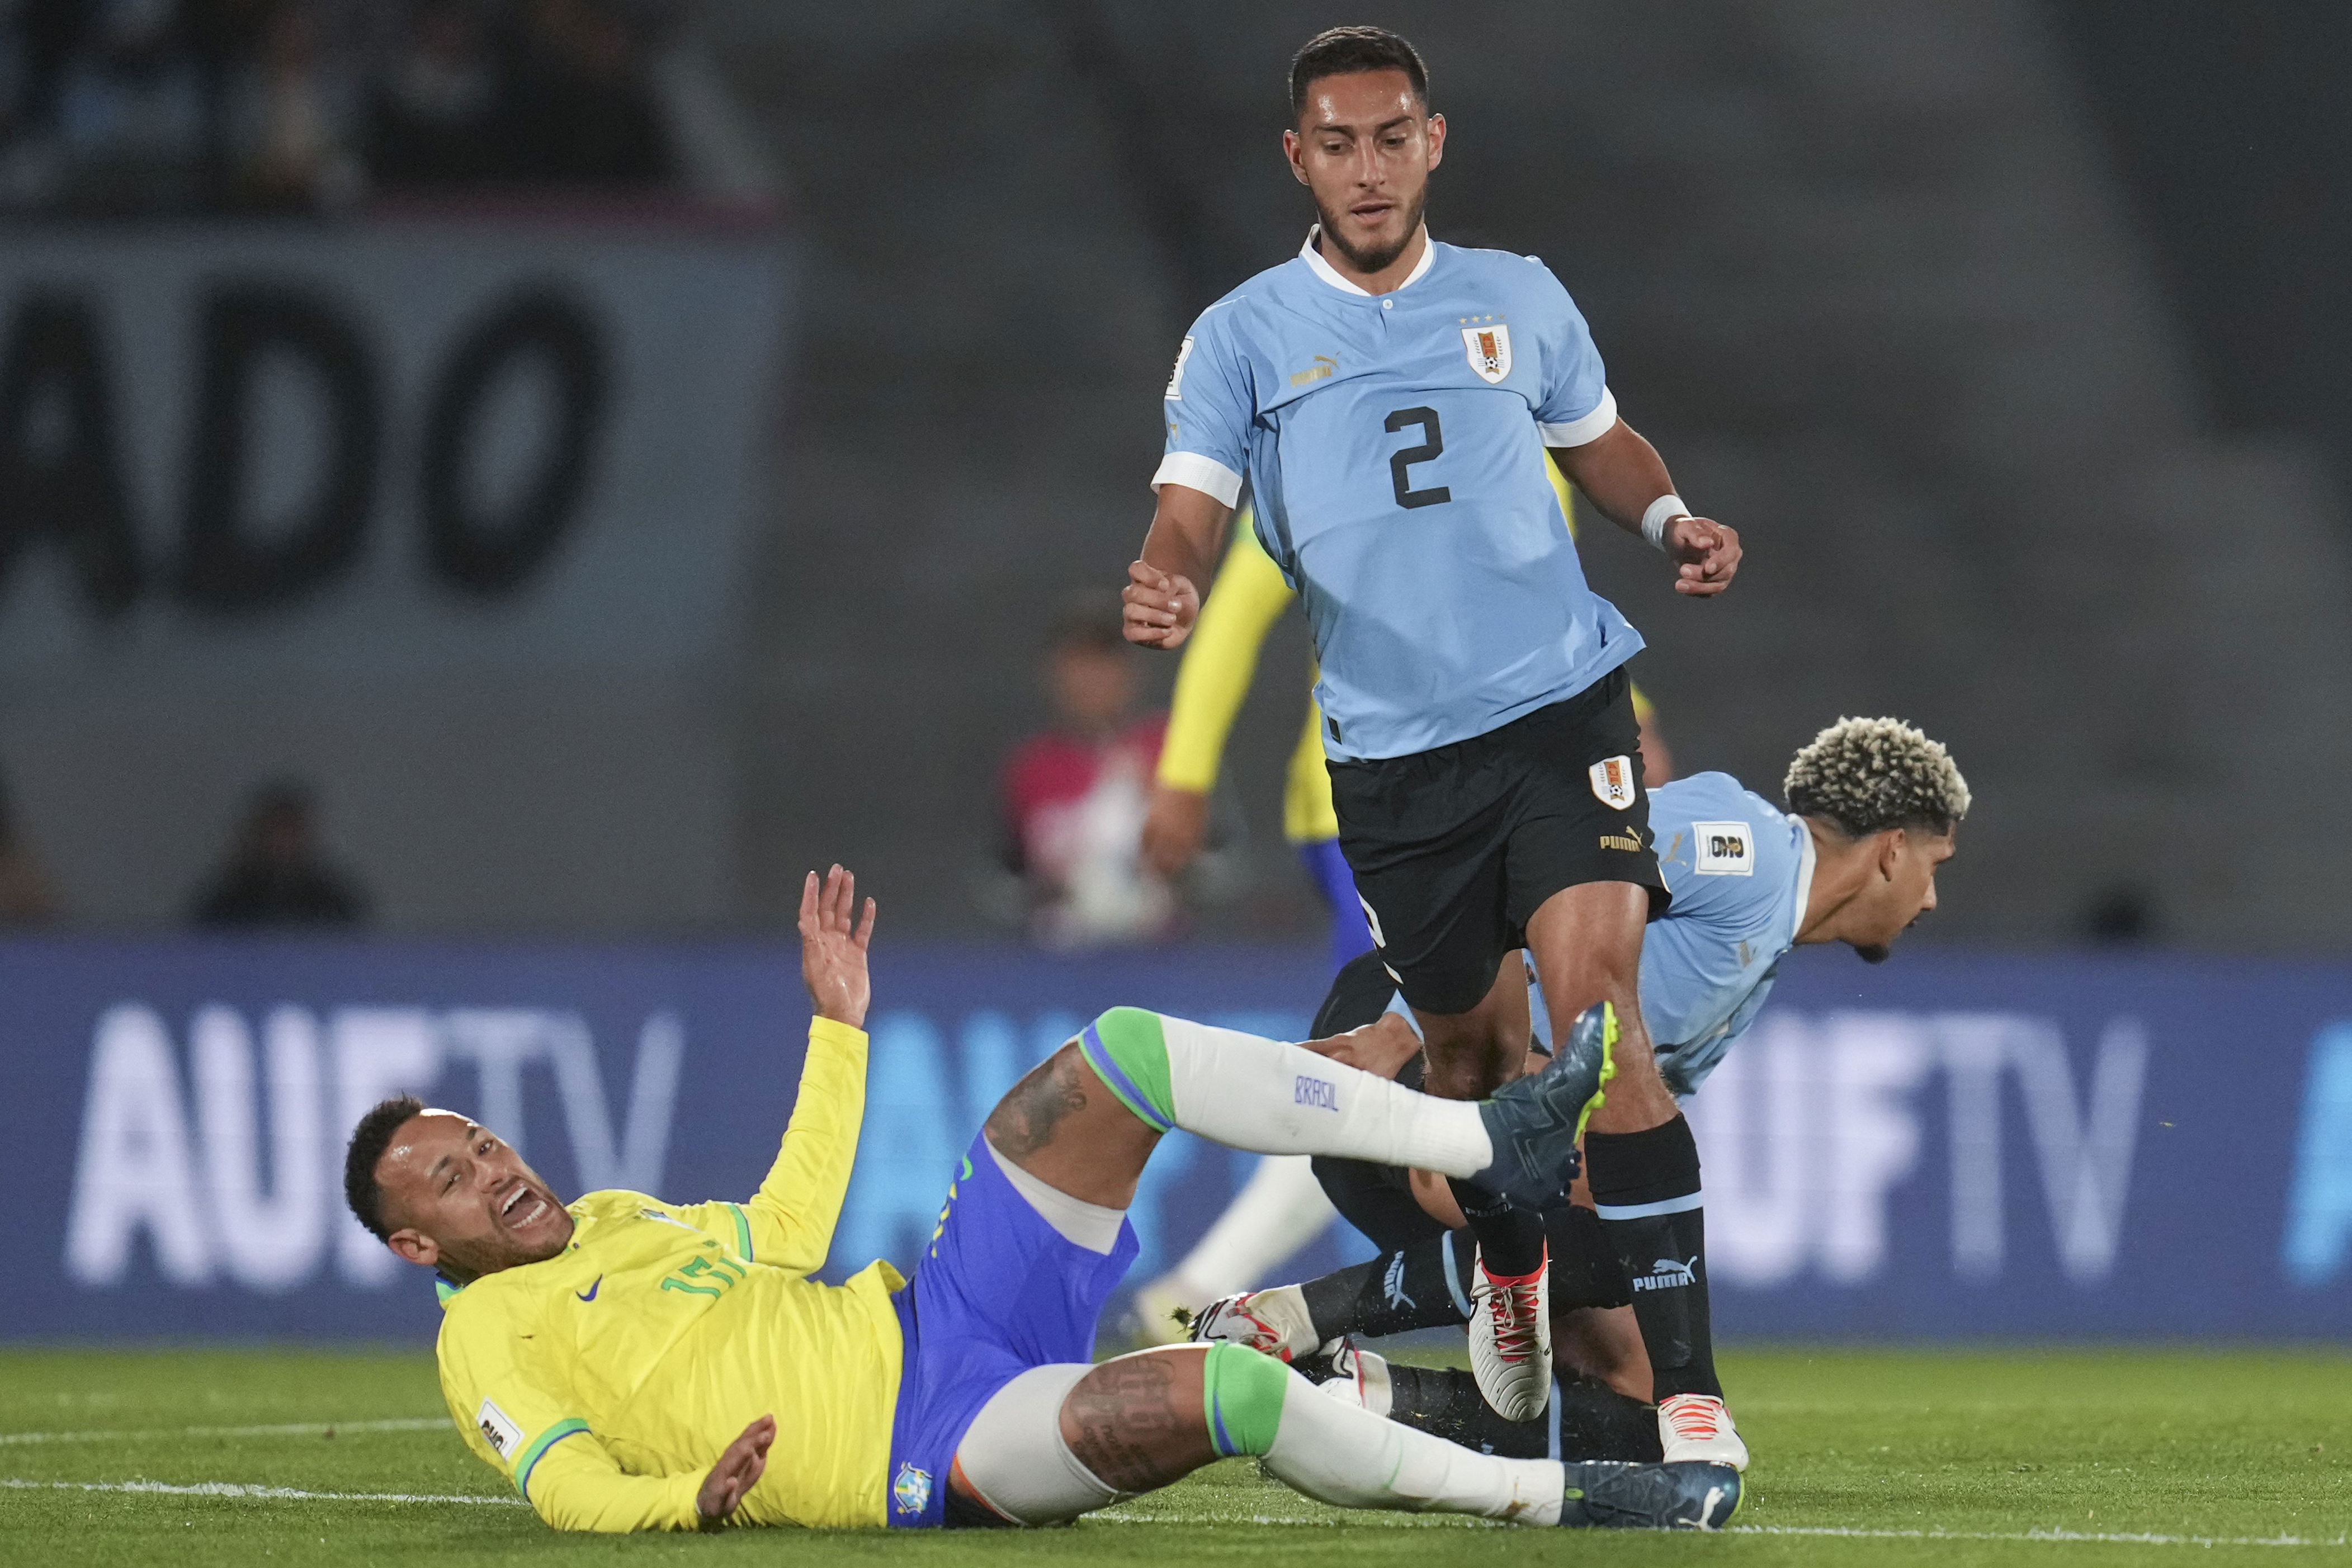 neymar returns to al hilal for rehabilitation amid reports player wants santos return